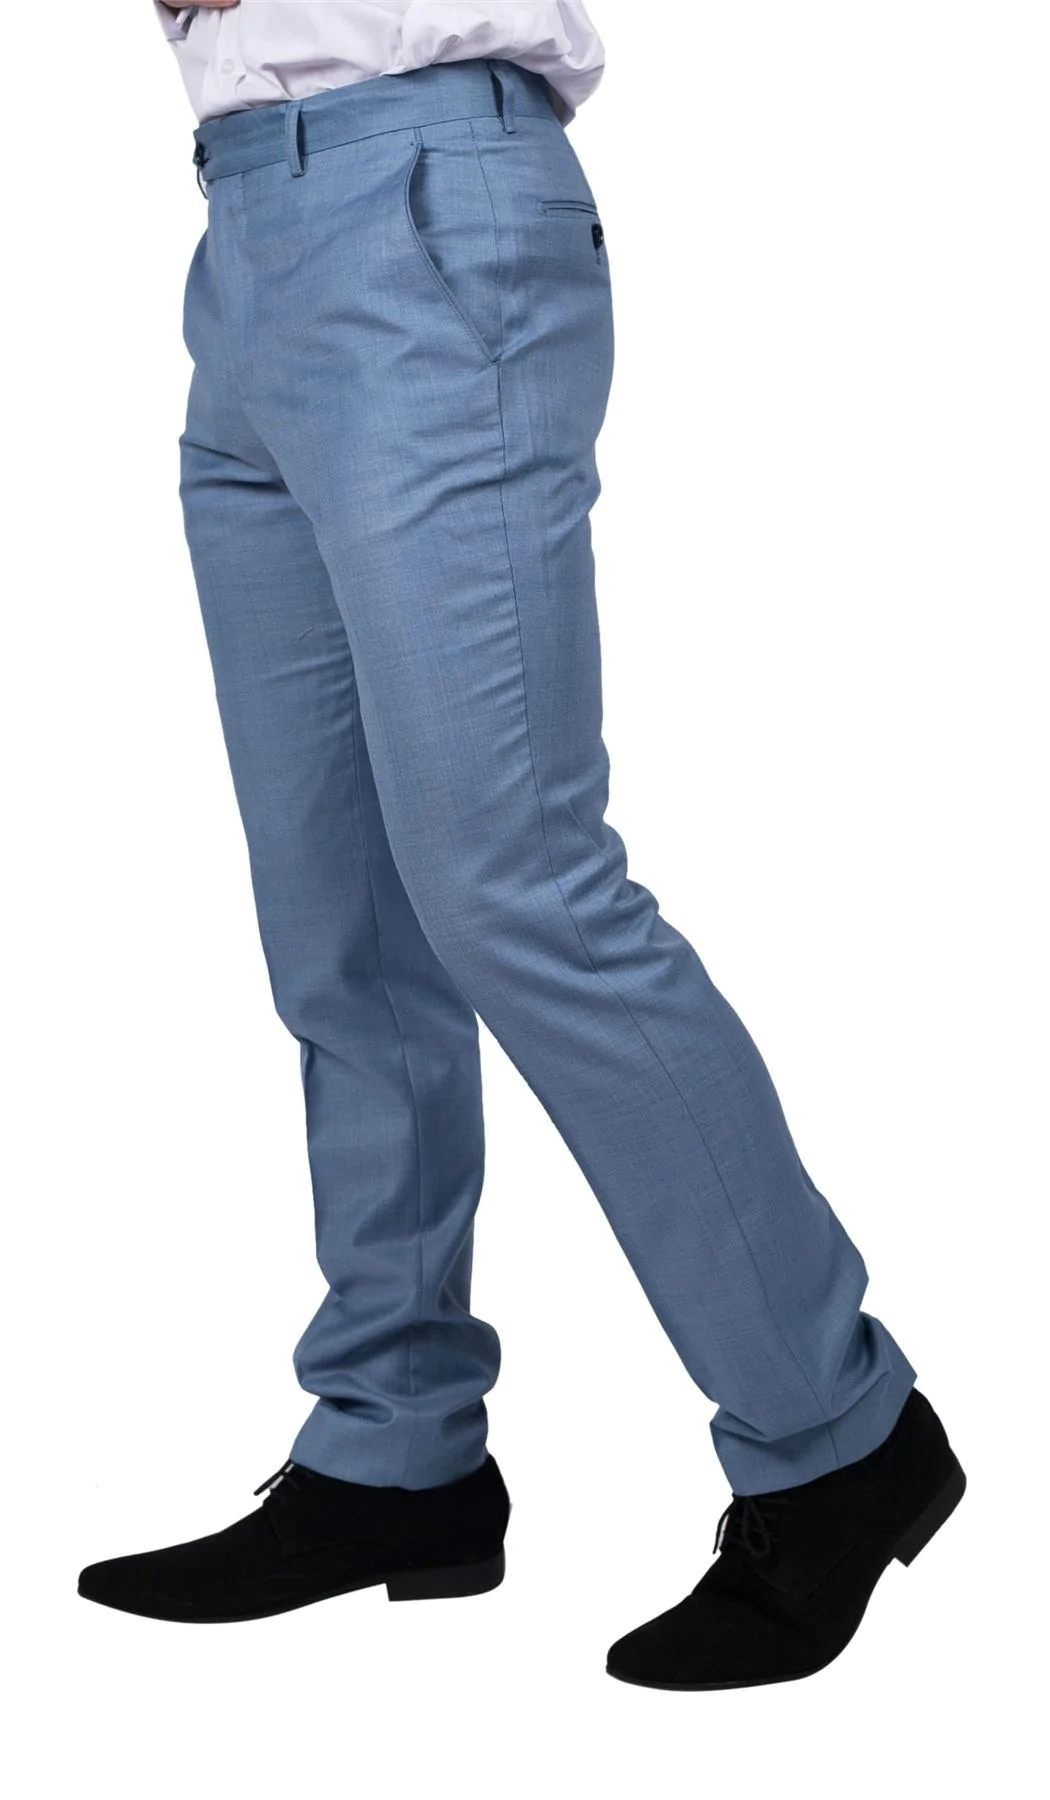 MANCREW Formal Pants for men - Formal Trousers Combo - Sky Blue, Black